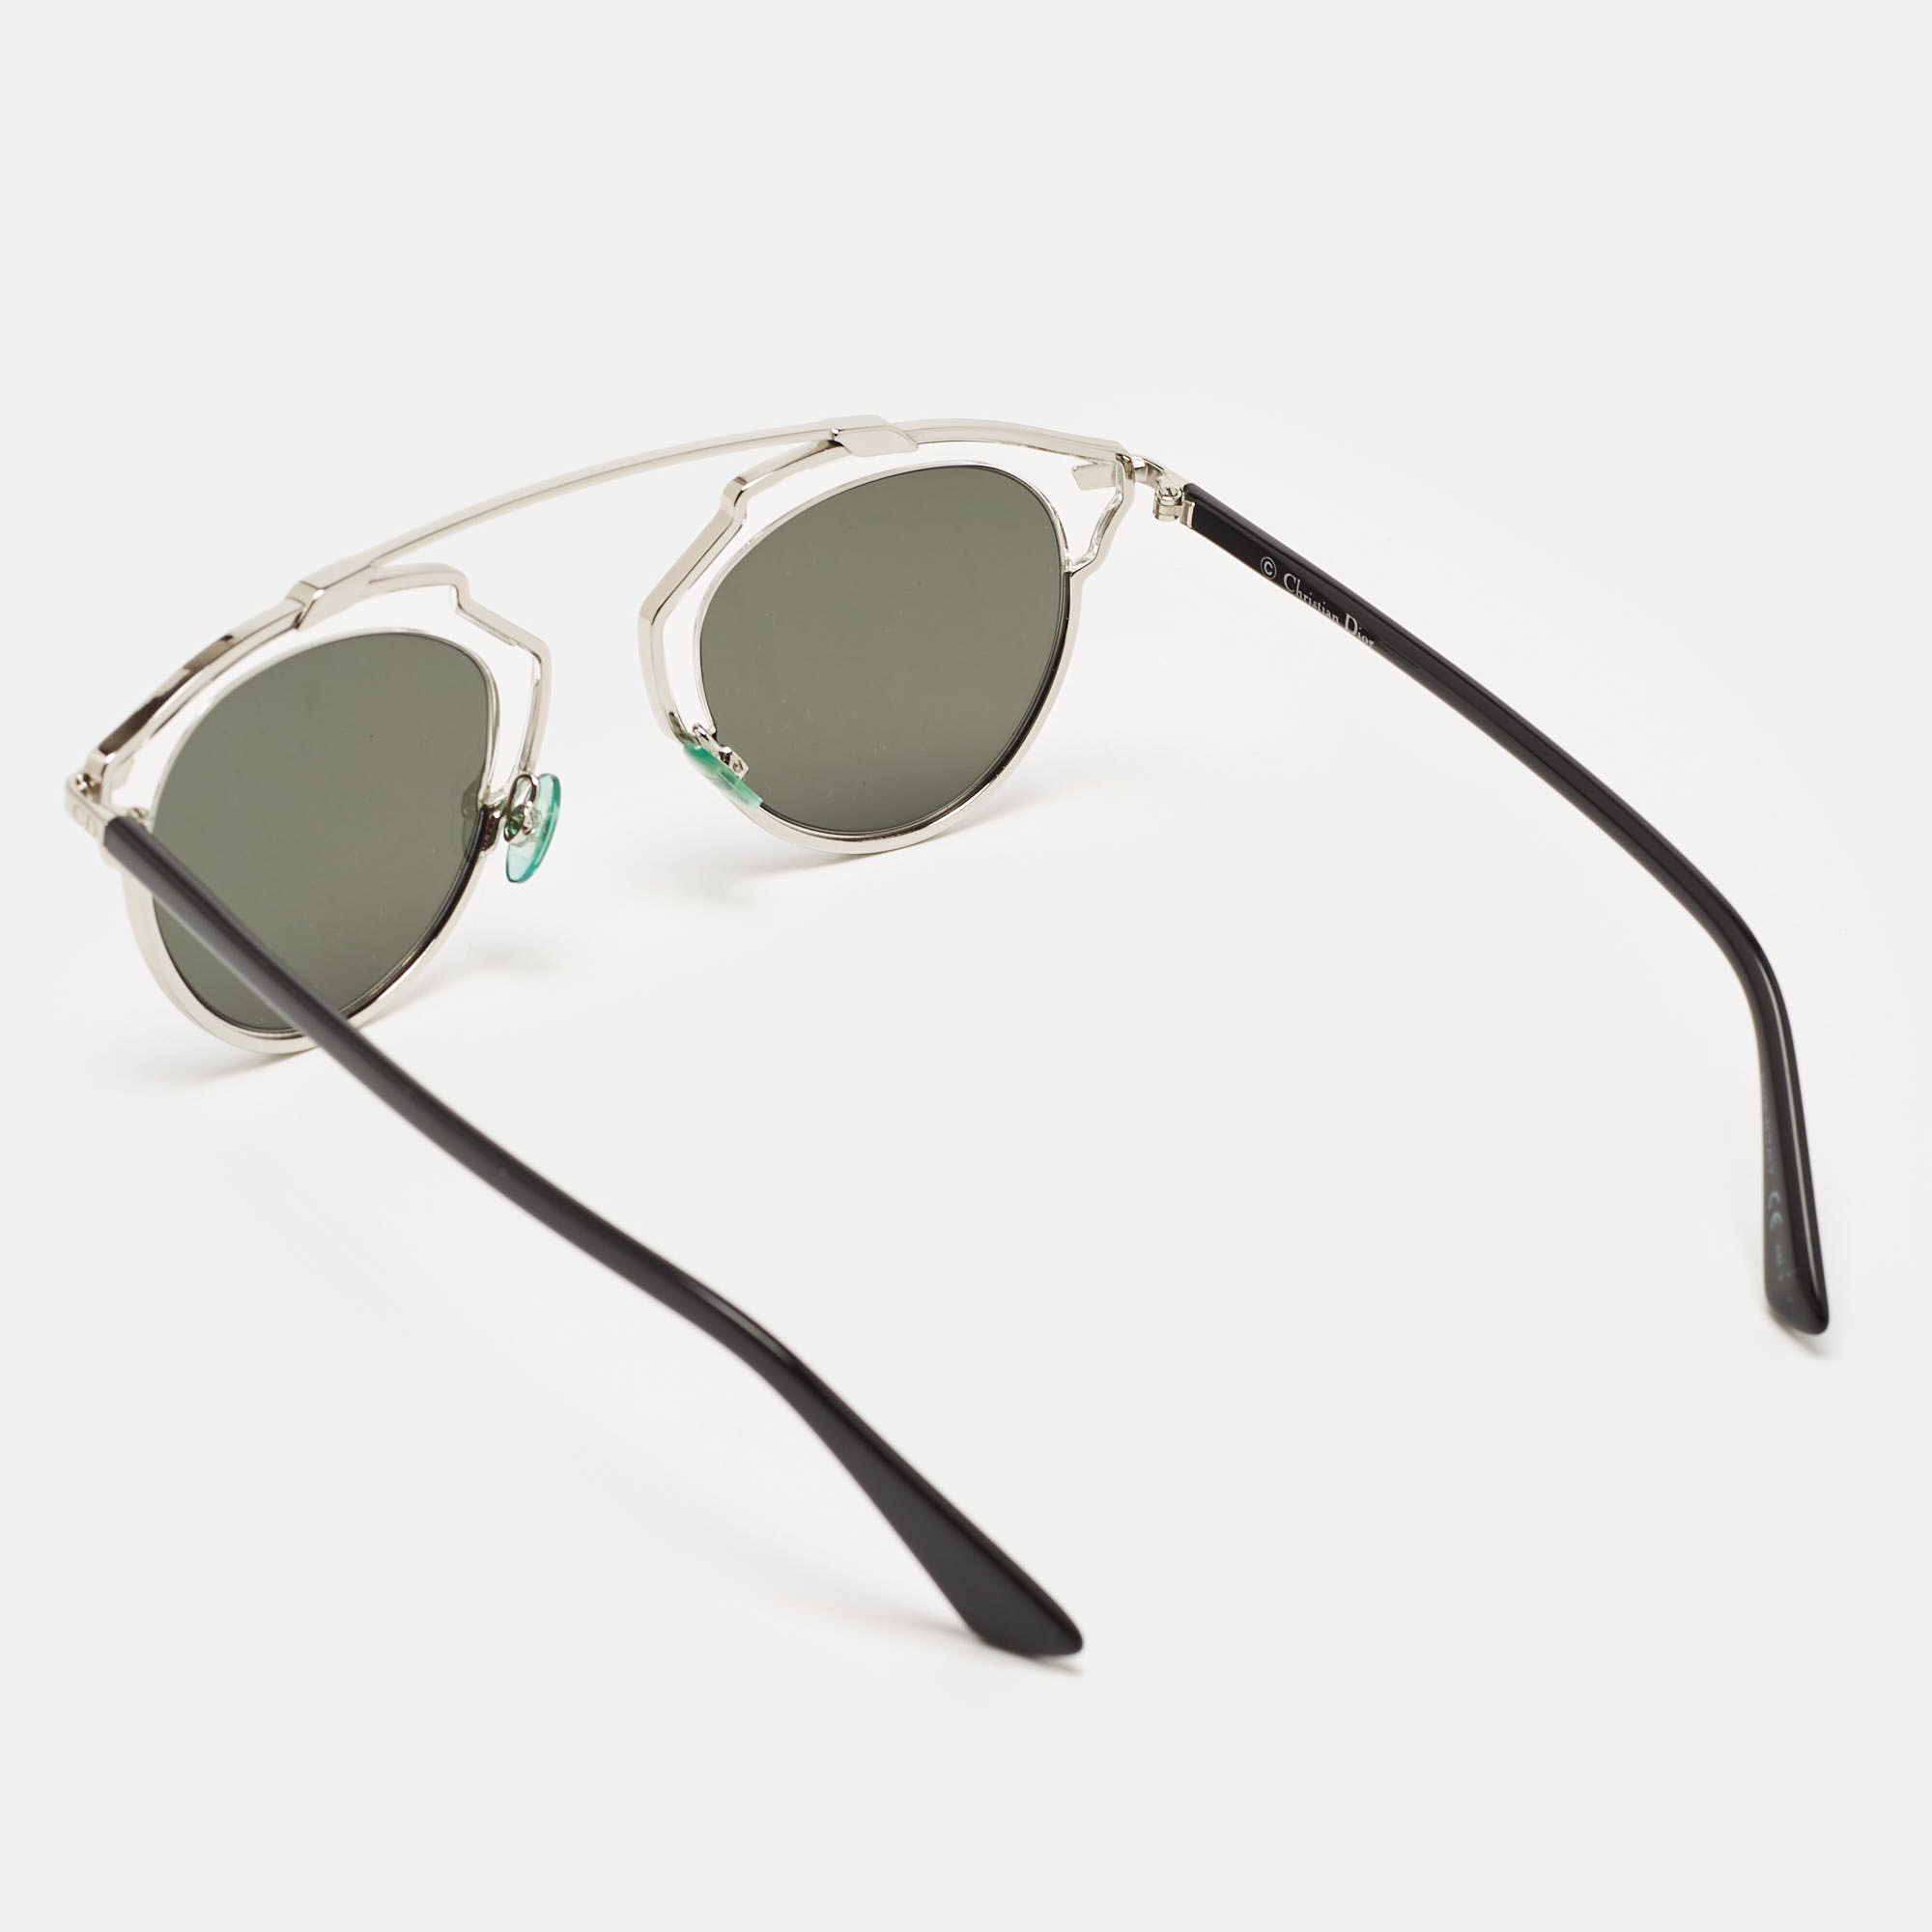 Dior Silver Mirrored APPDC So Real Round Sunglasses